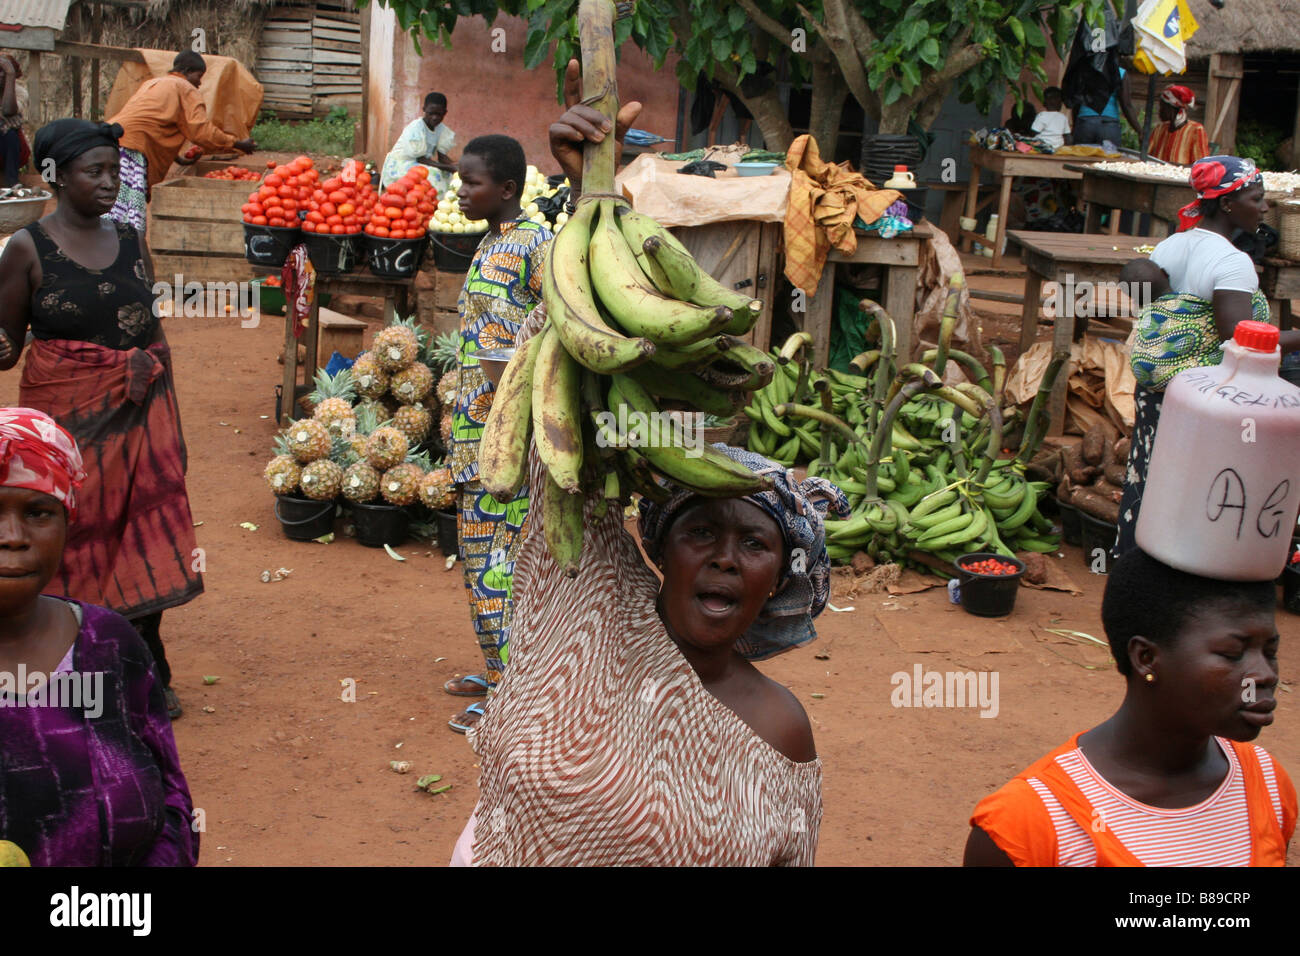 Street market woman selling bananas Stock Photo